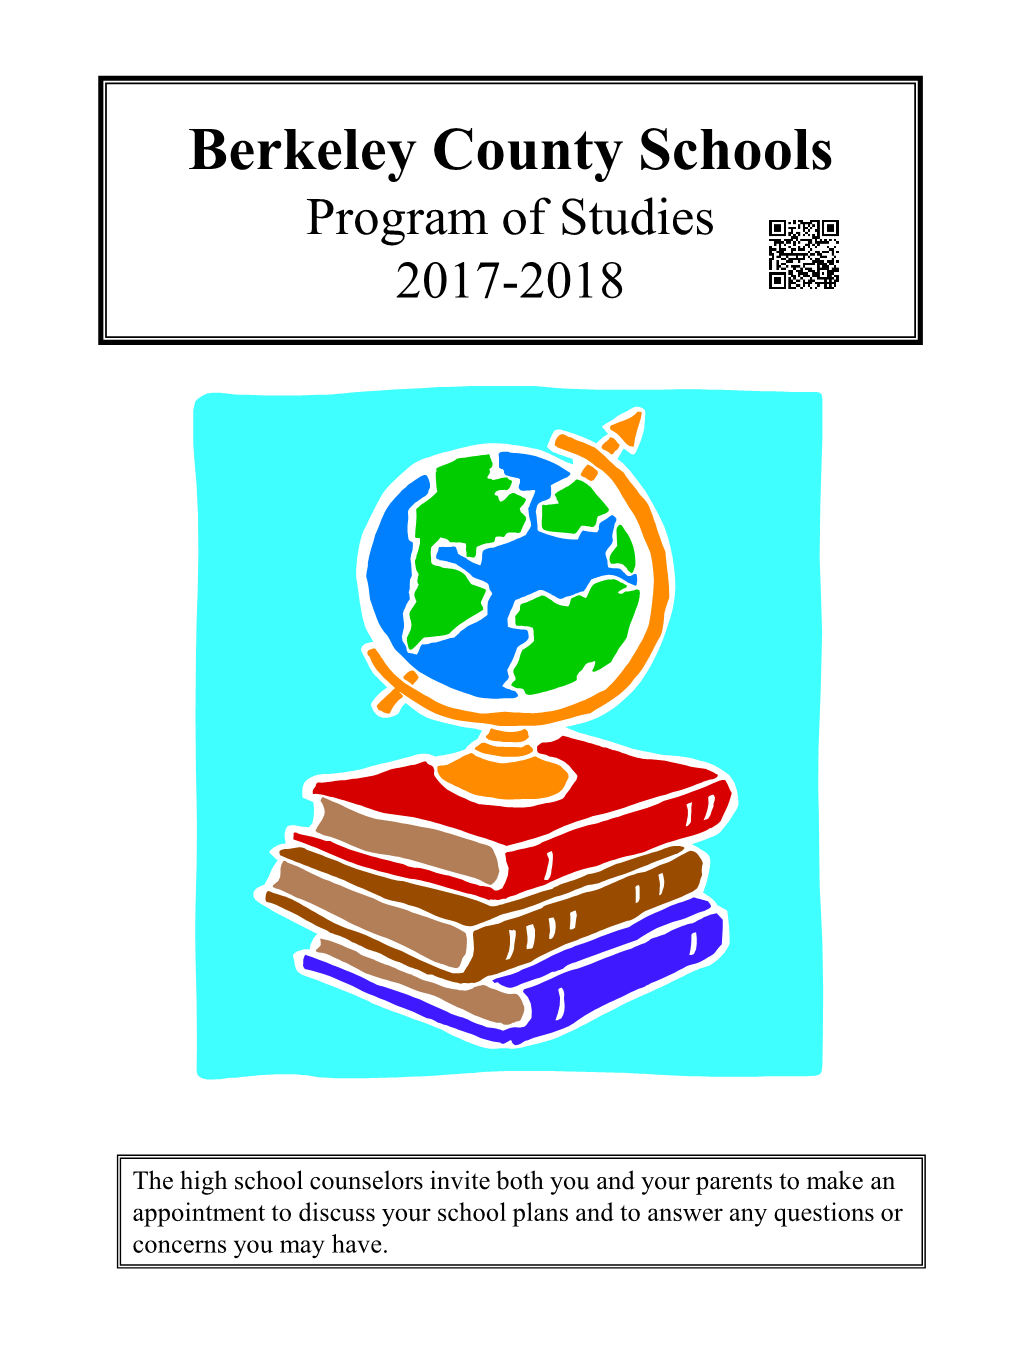 Program of Studies 2017-2018